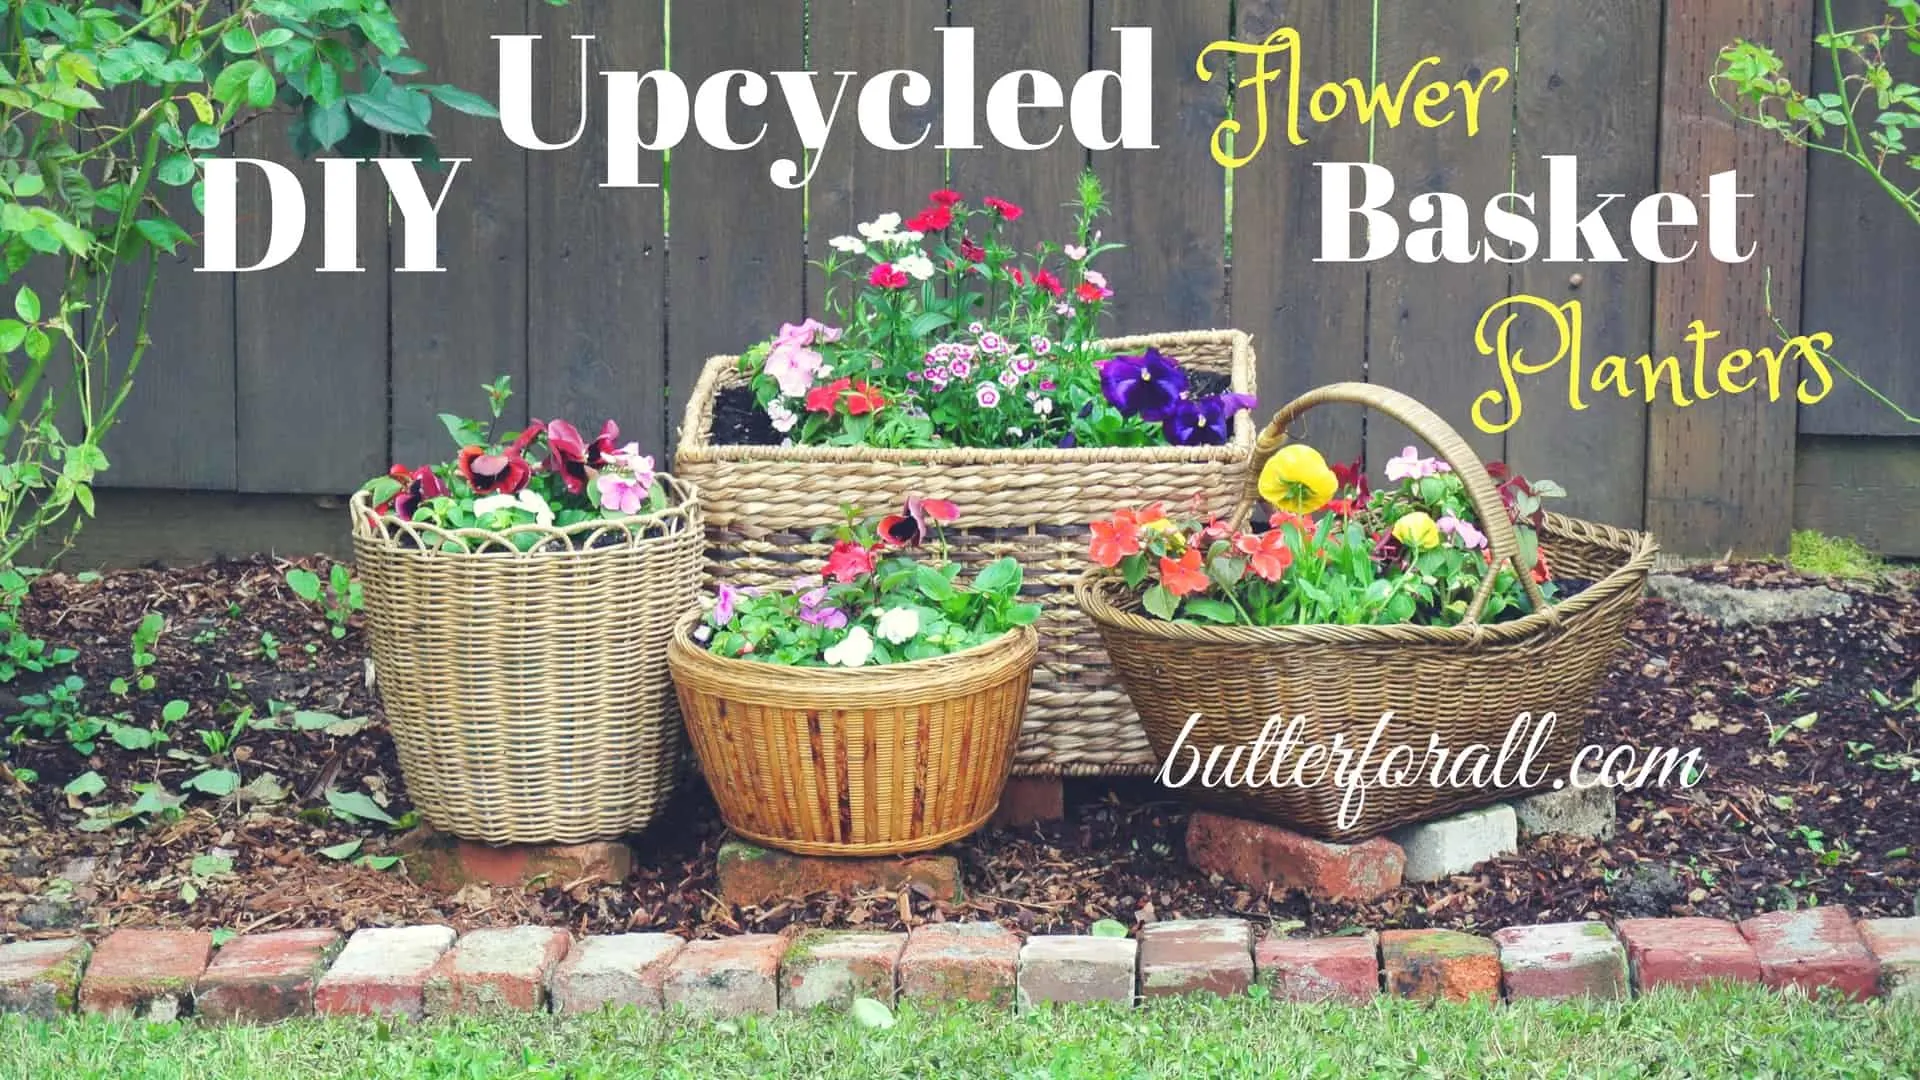 DIY Upcycled Flower Basket Planters